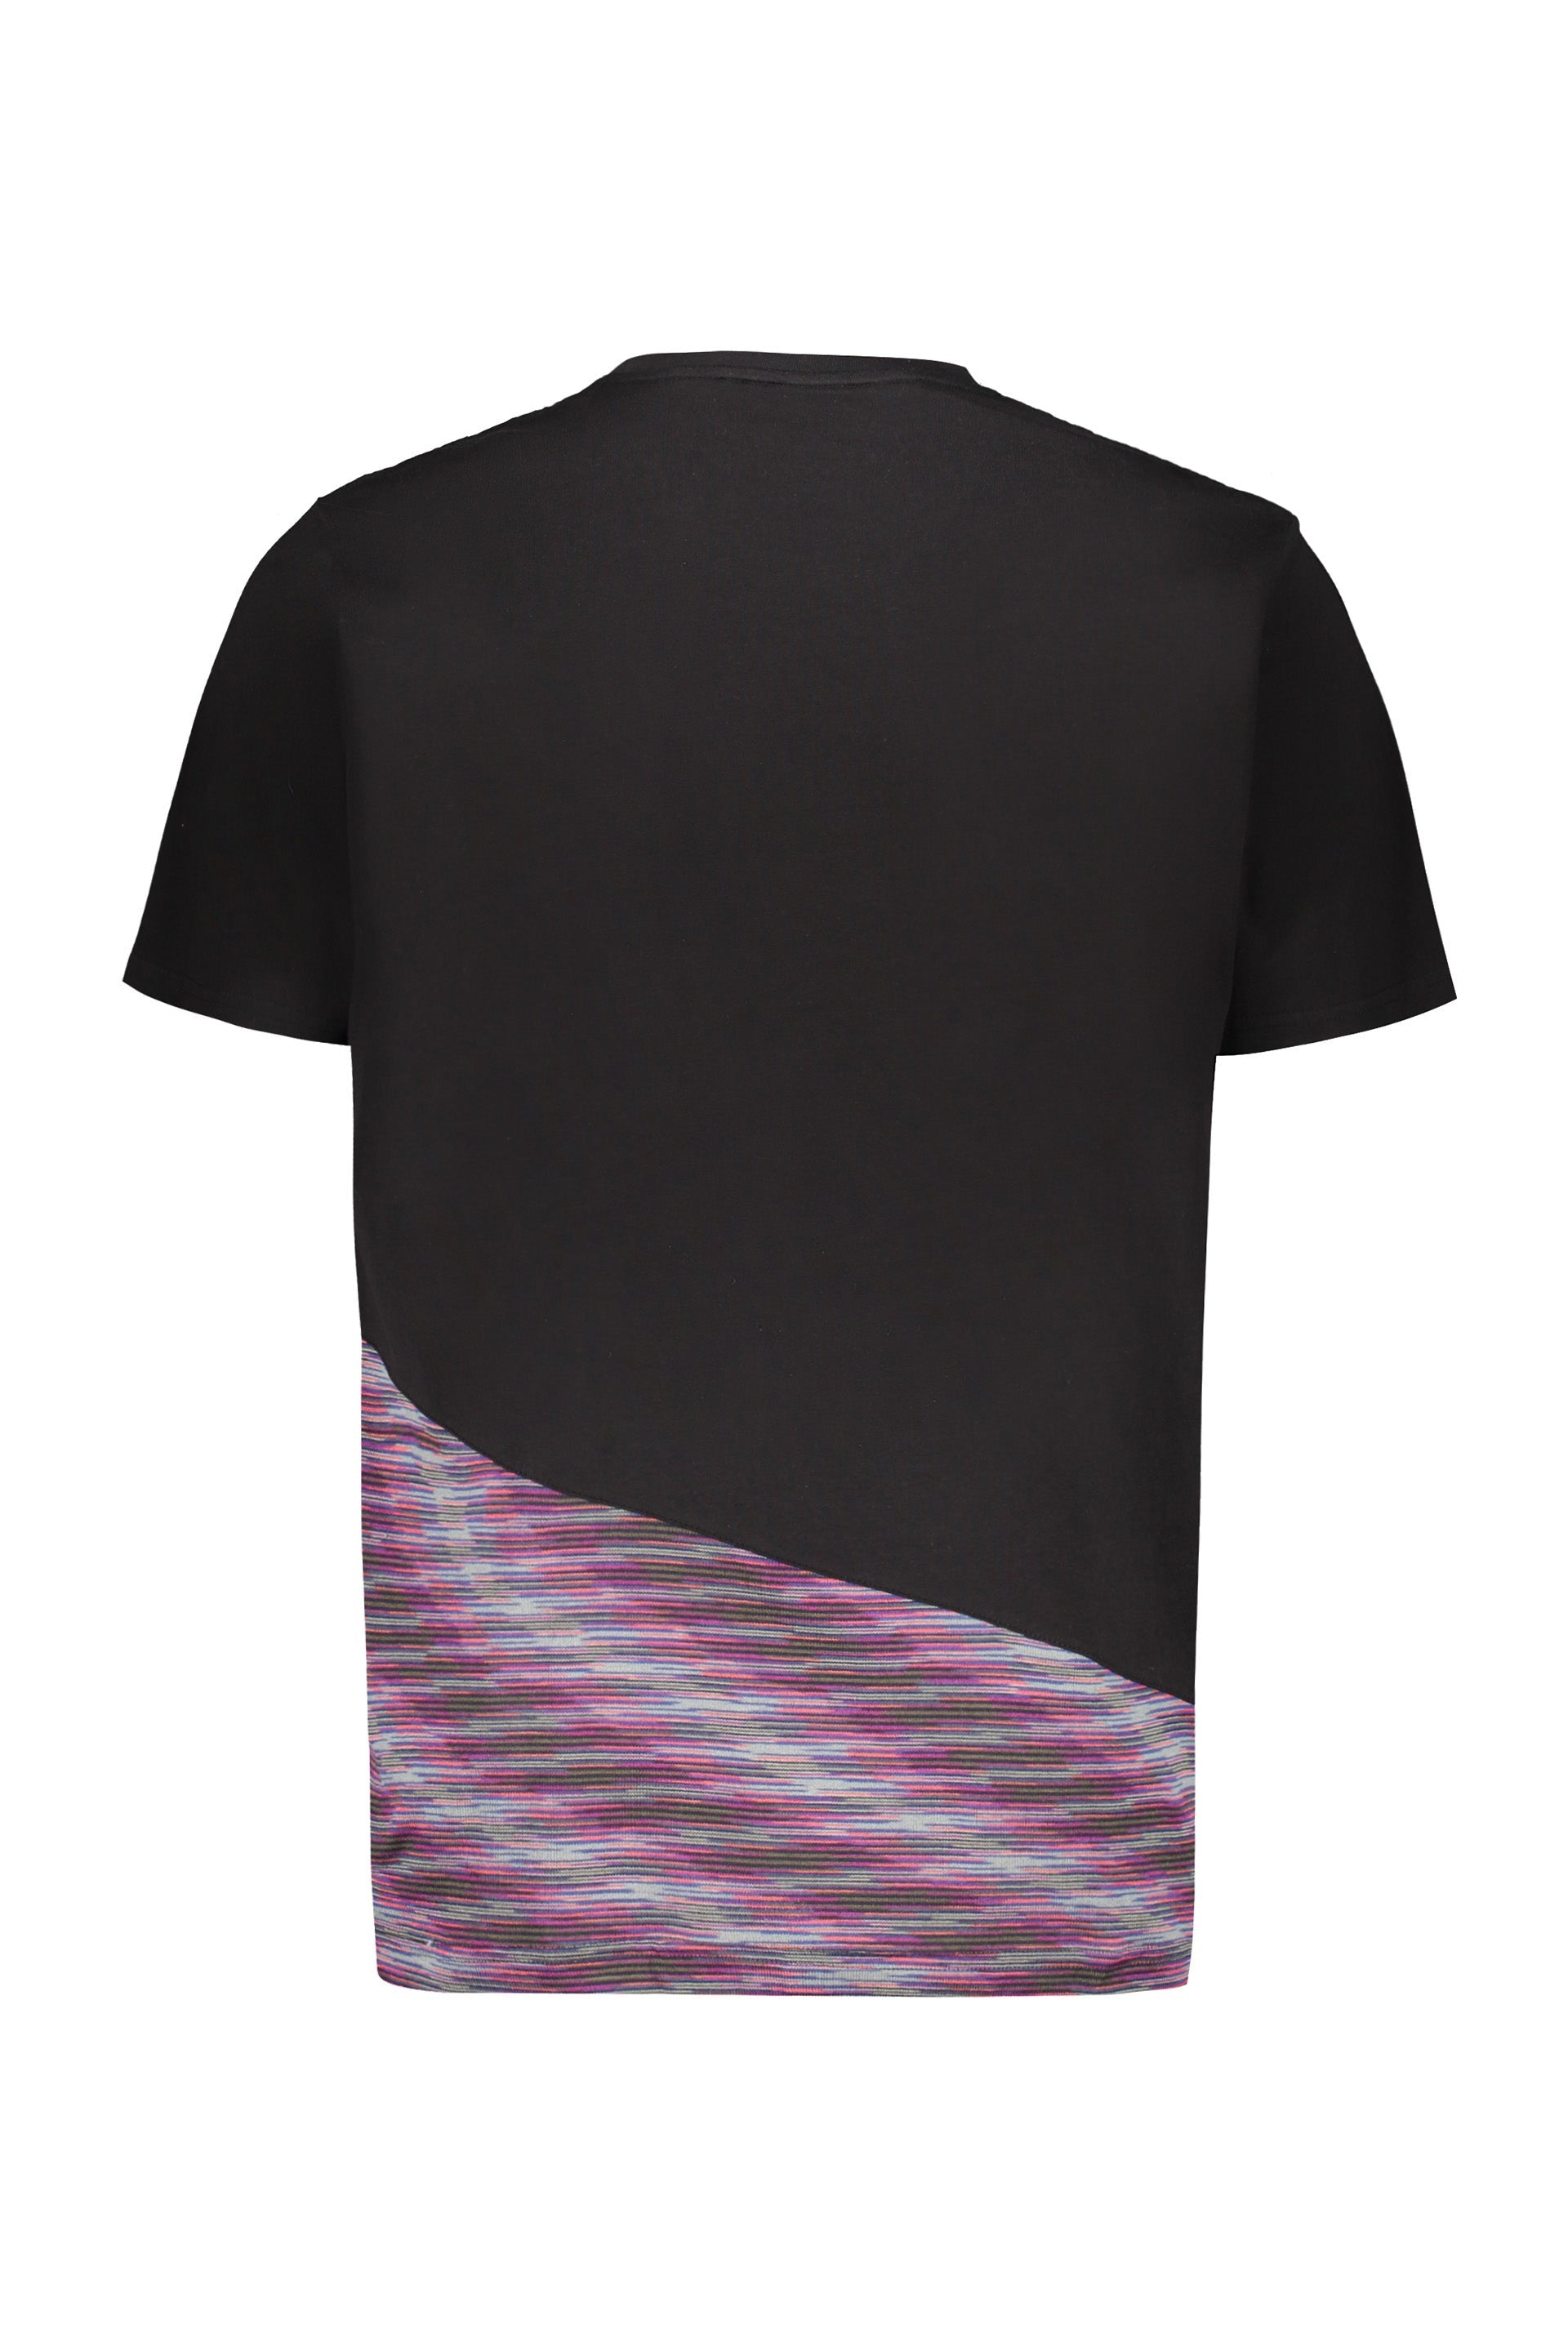 Missoni-OUTLET-SALE-Logo-cotton-t-shirt-Shirts-ARCHIVE-COLLECTION-2.jpg